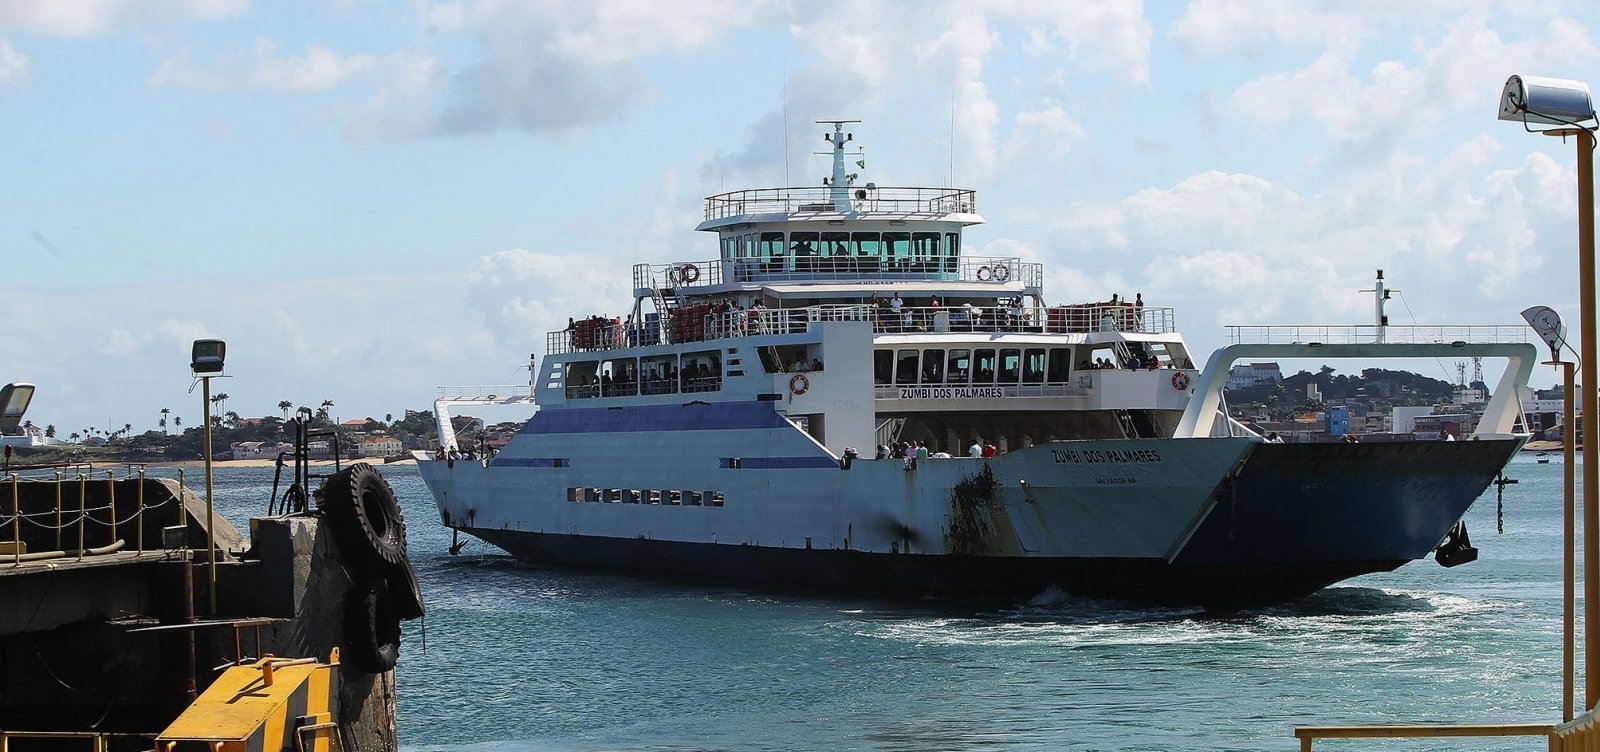 Sistema ferry boat vai funcionar sem parar a partir de segunda